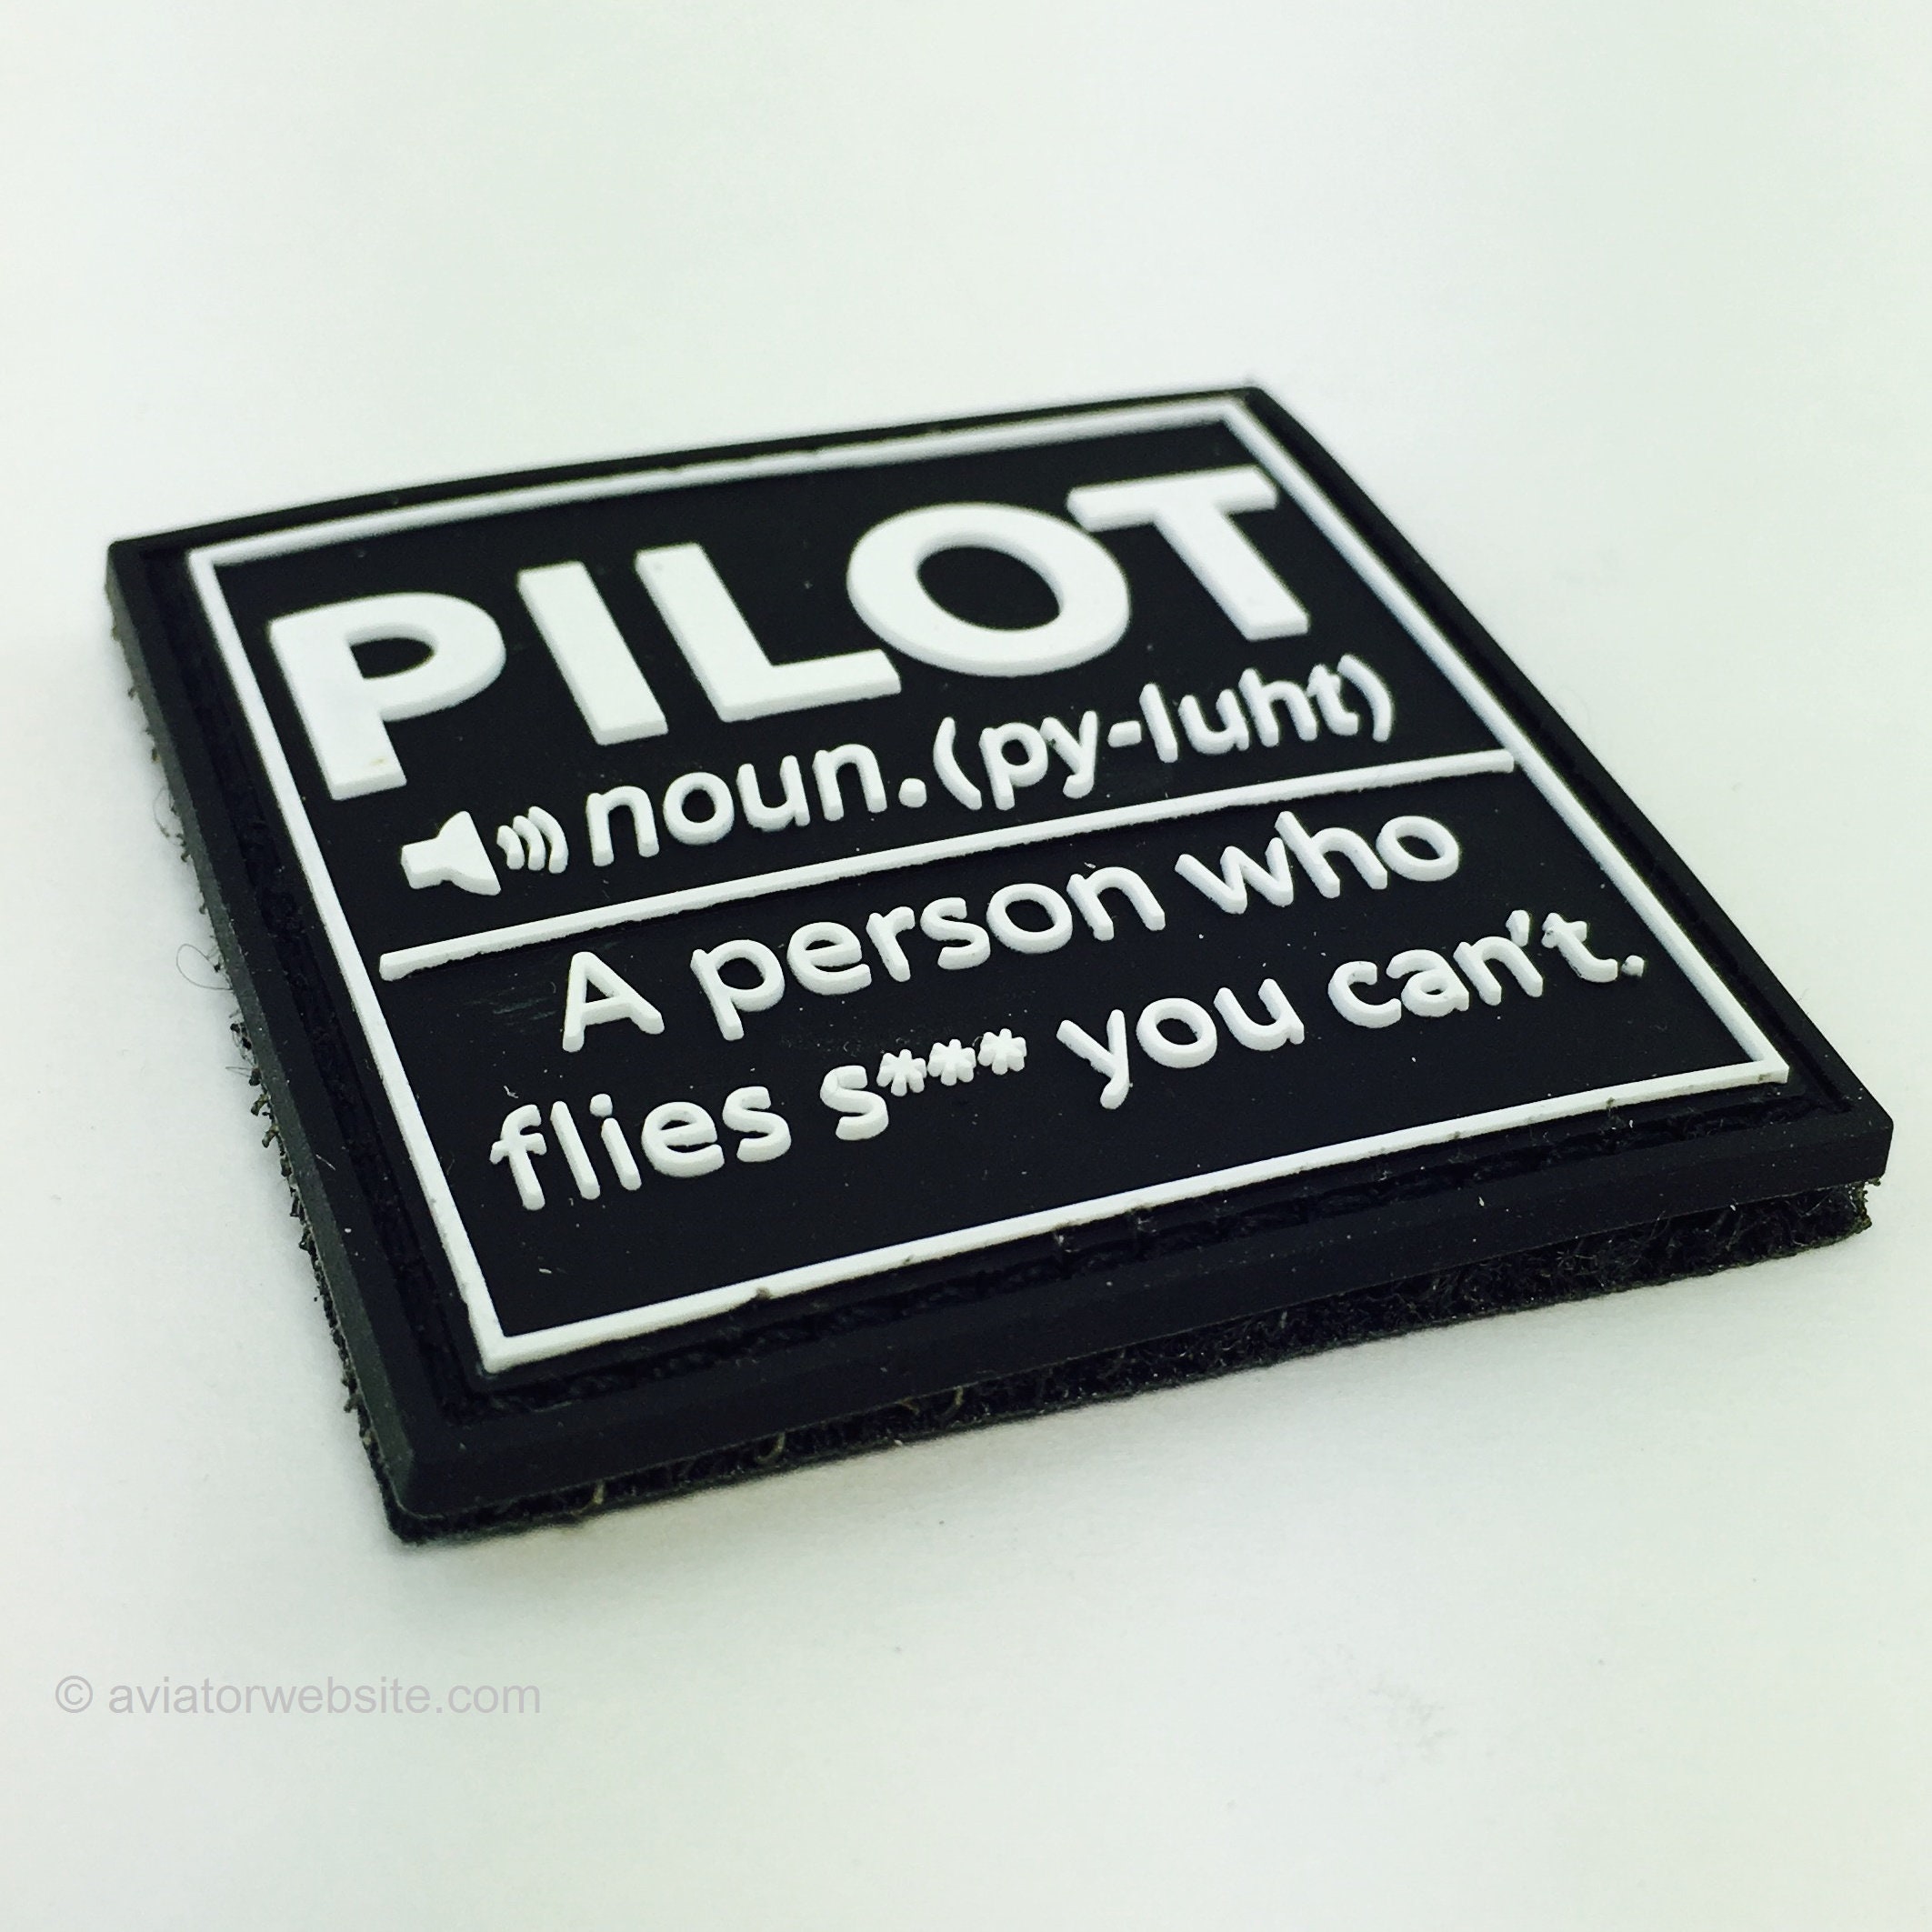 Pilot patch Etsy 日本